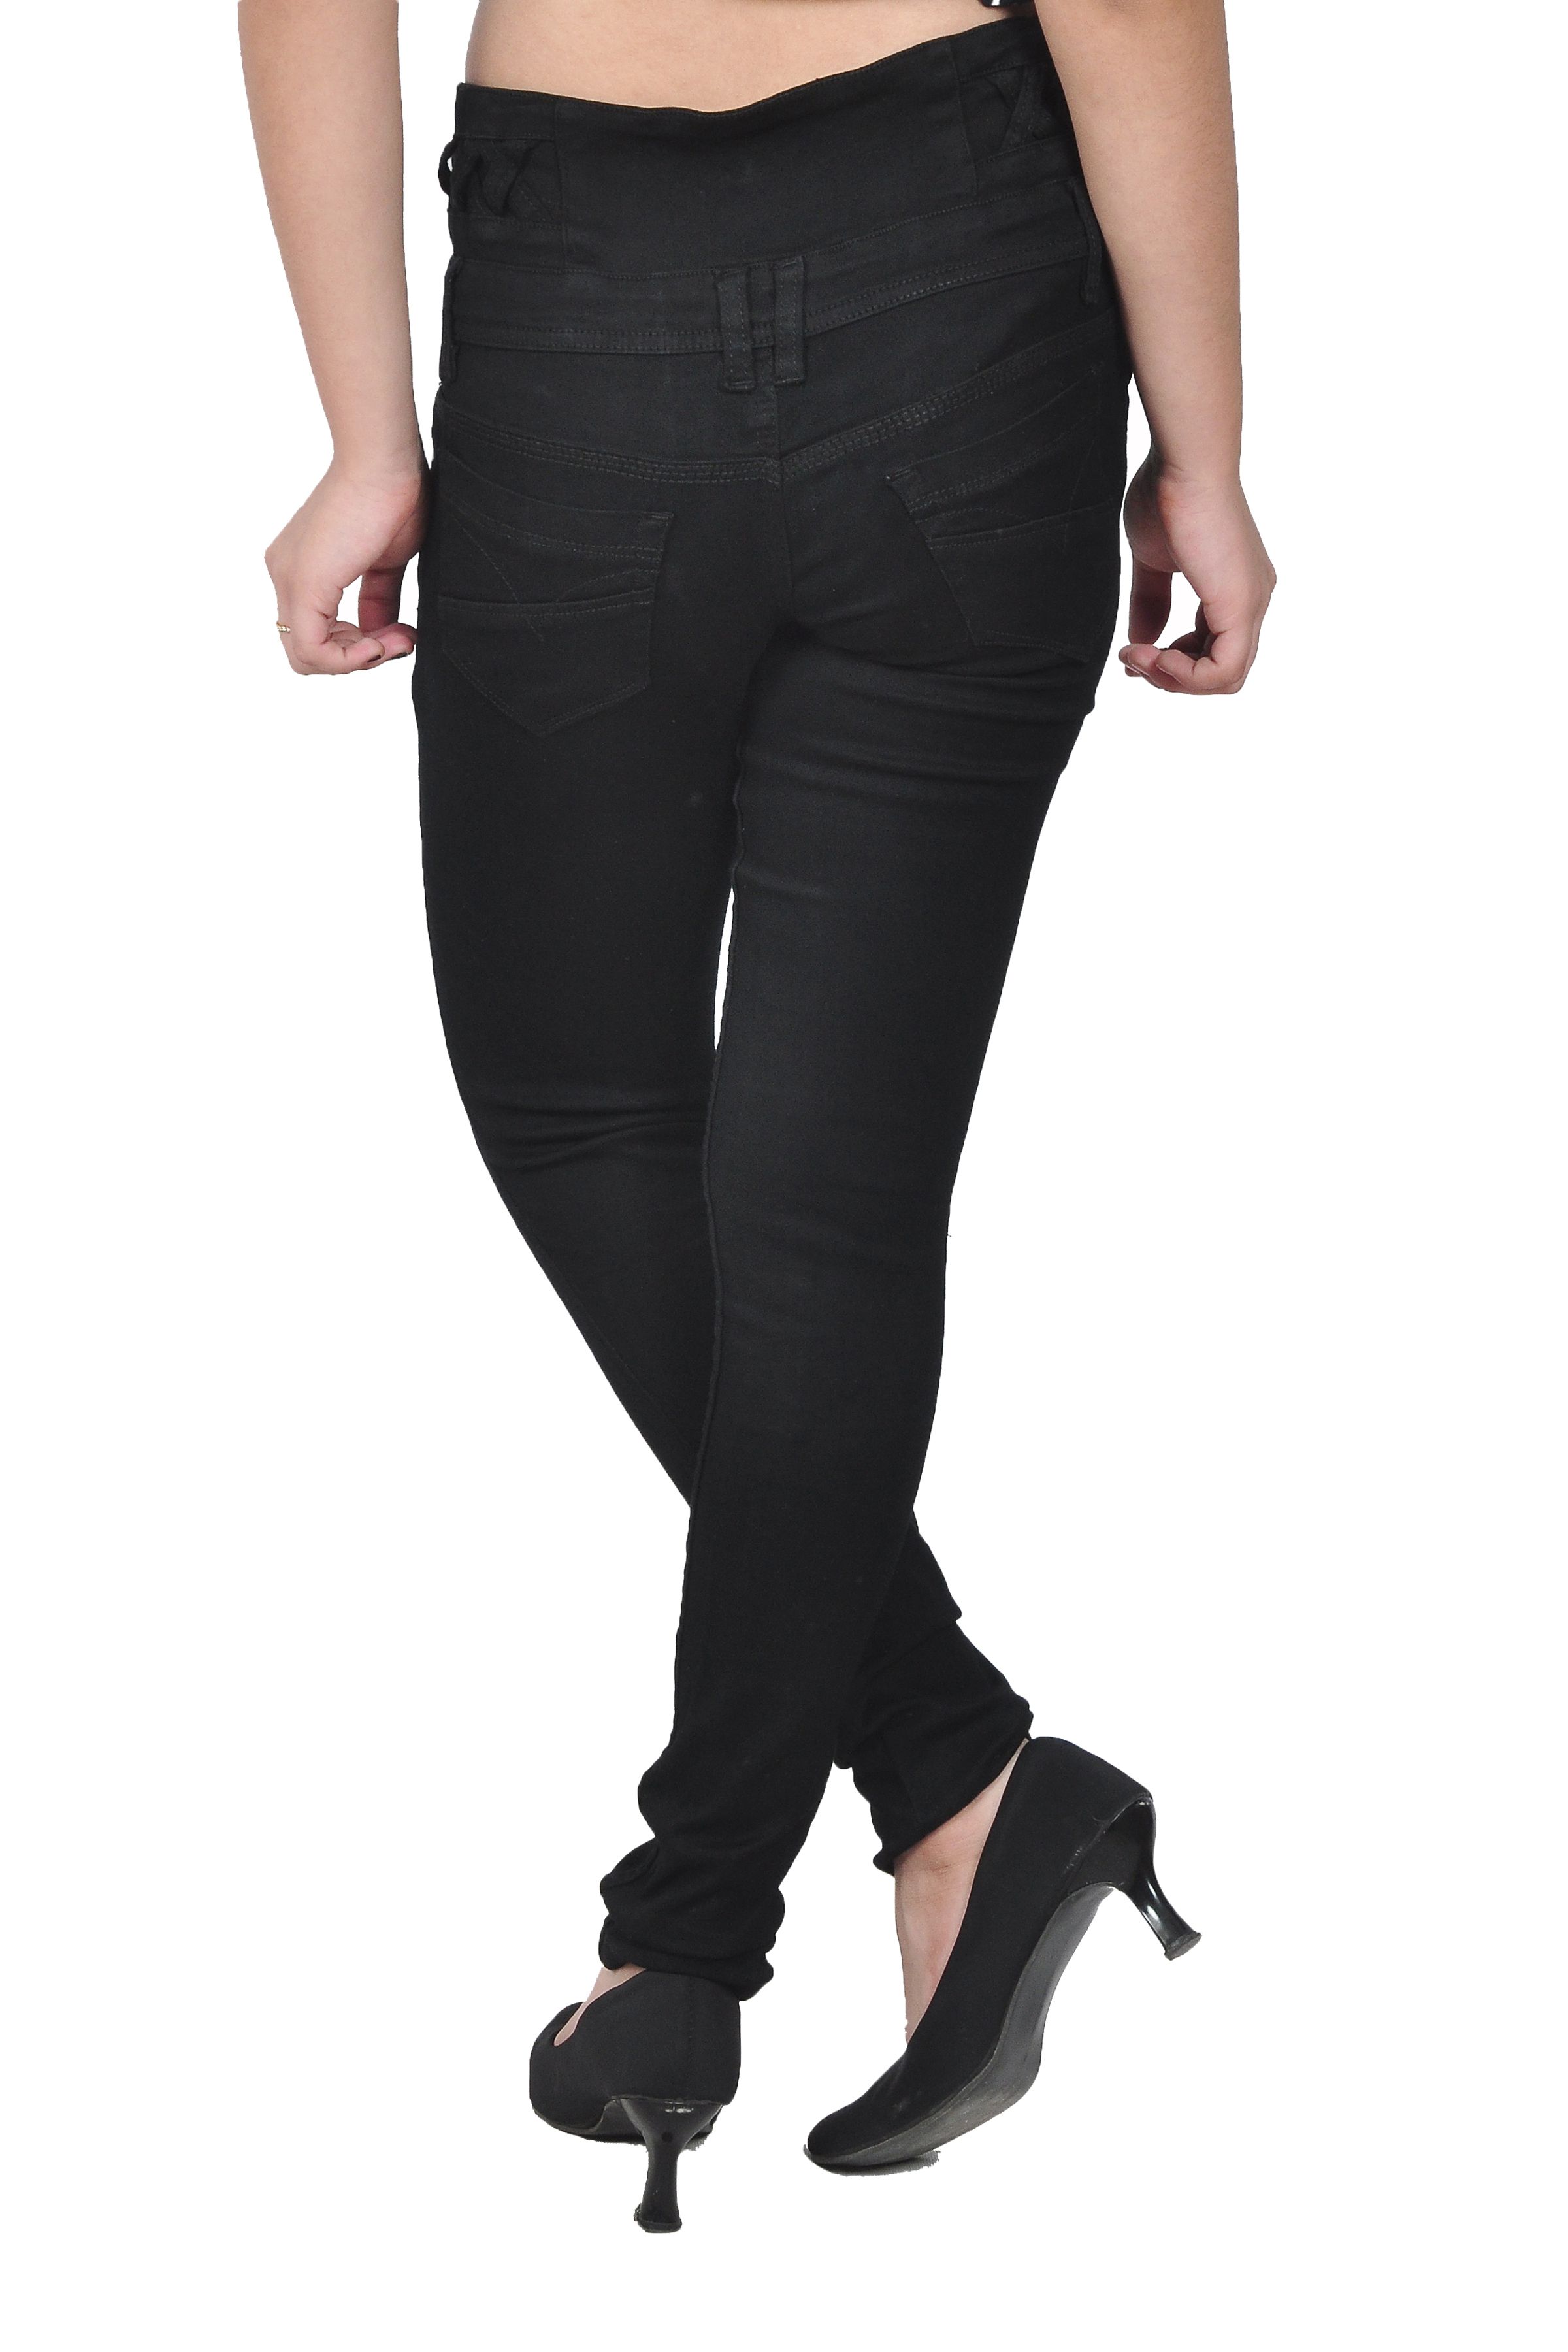 Nifty Black Denim Jeans - Buy Nifty Black Denim Jeans Online at Best ...